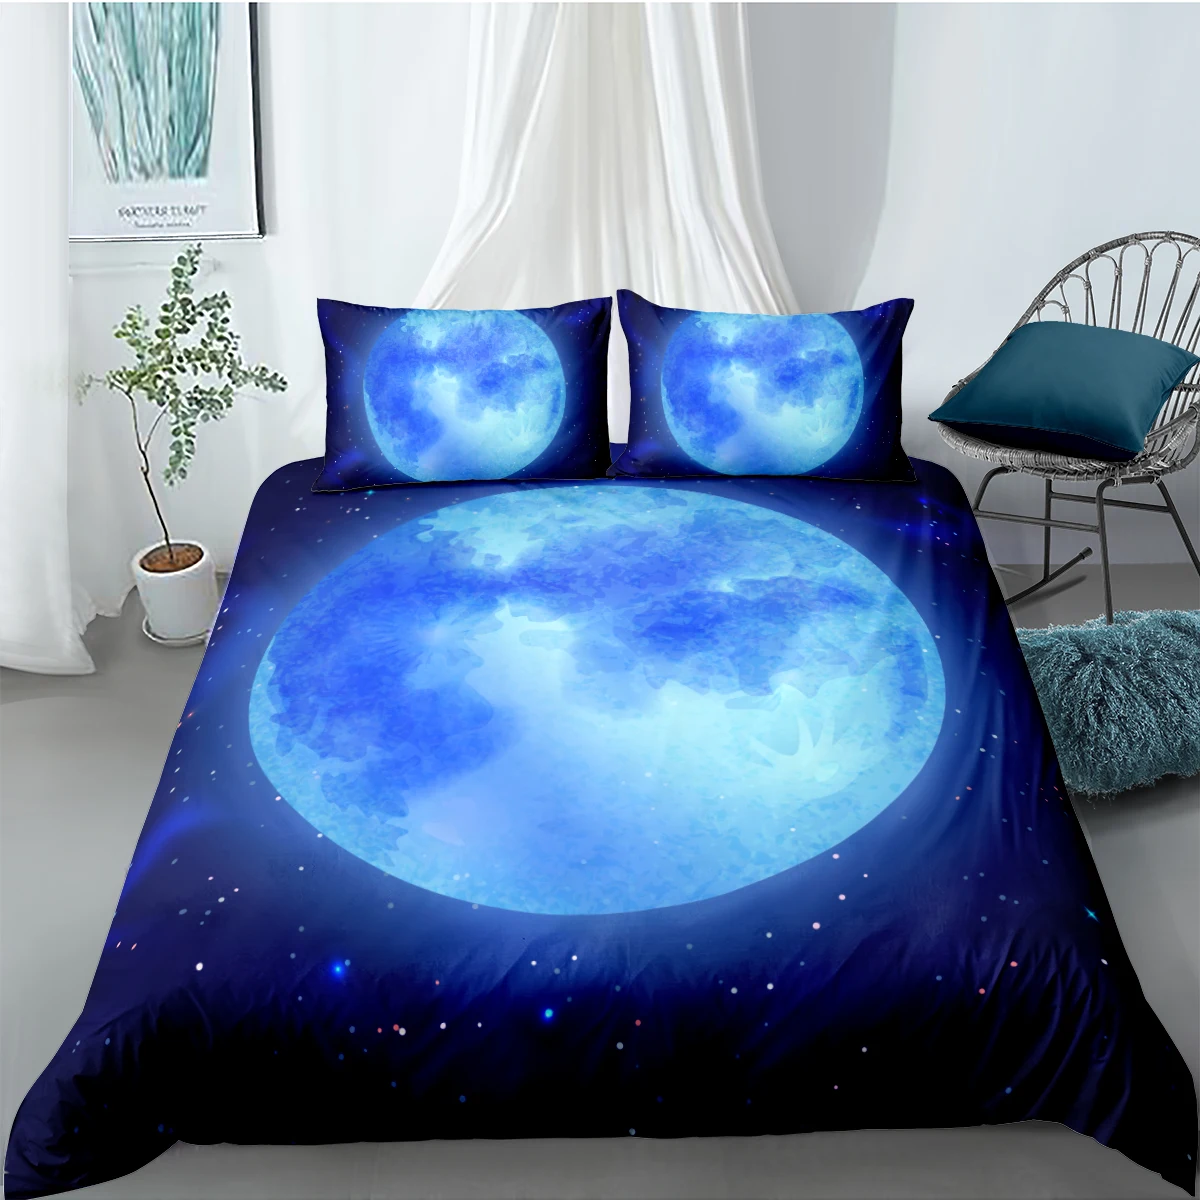 

3D Blue Duvet Cover Sets Modern Comforter Cases Pillow Sham King Queen Super King Twin Double Size 203*230cm Universe Beddings